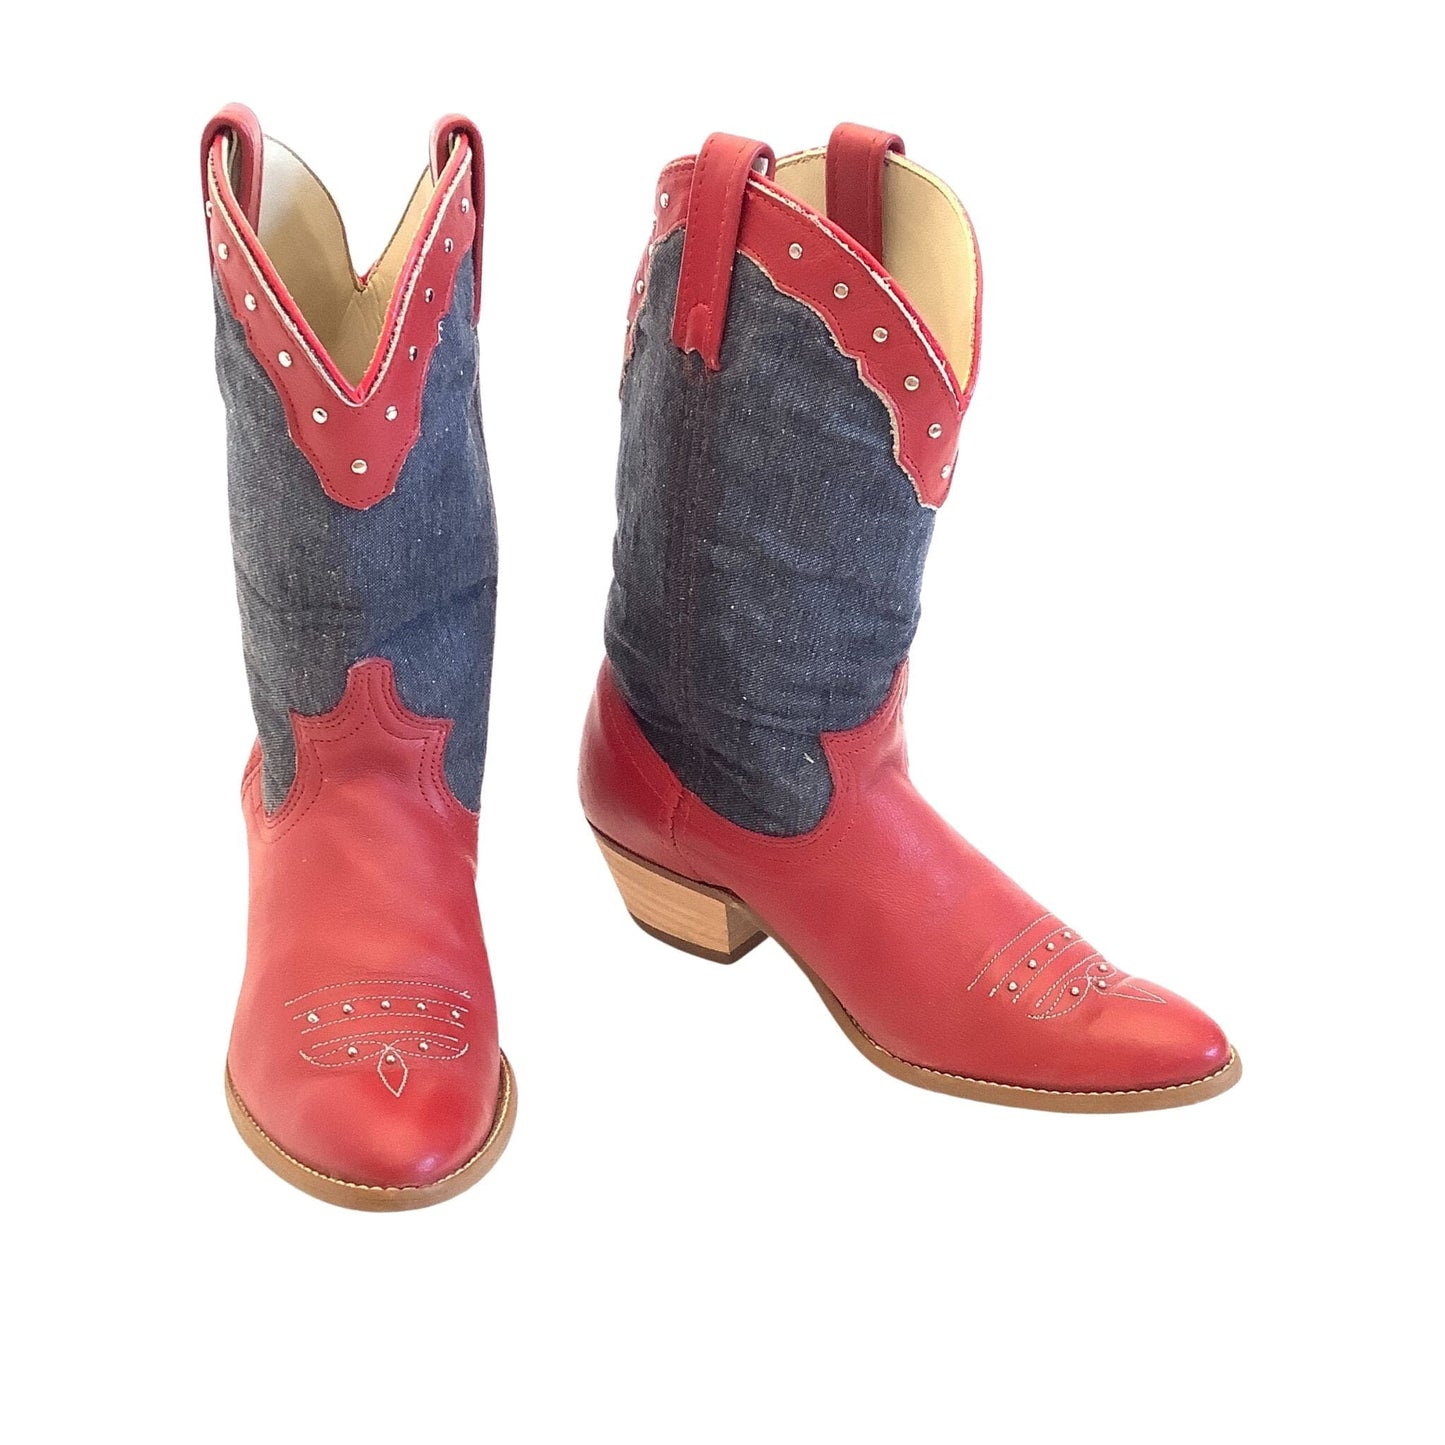 Dingo Western Boots 6.5 / Multi / Vintage 1970s